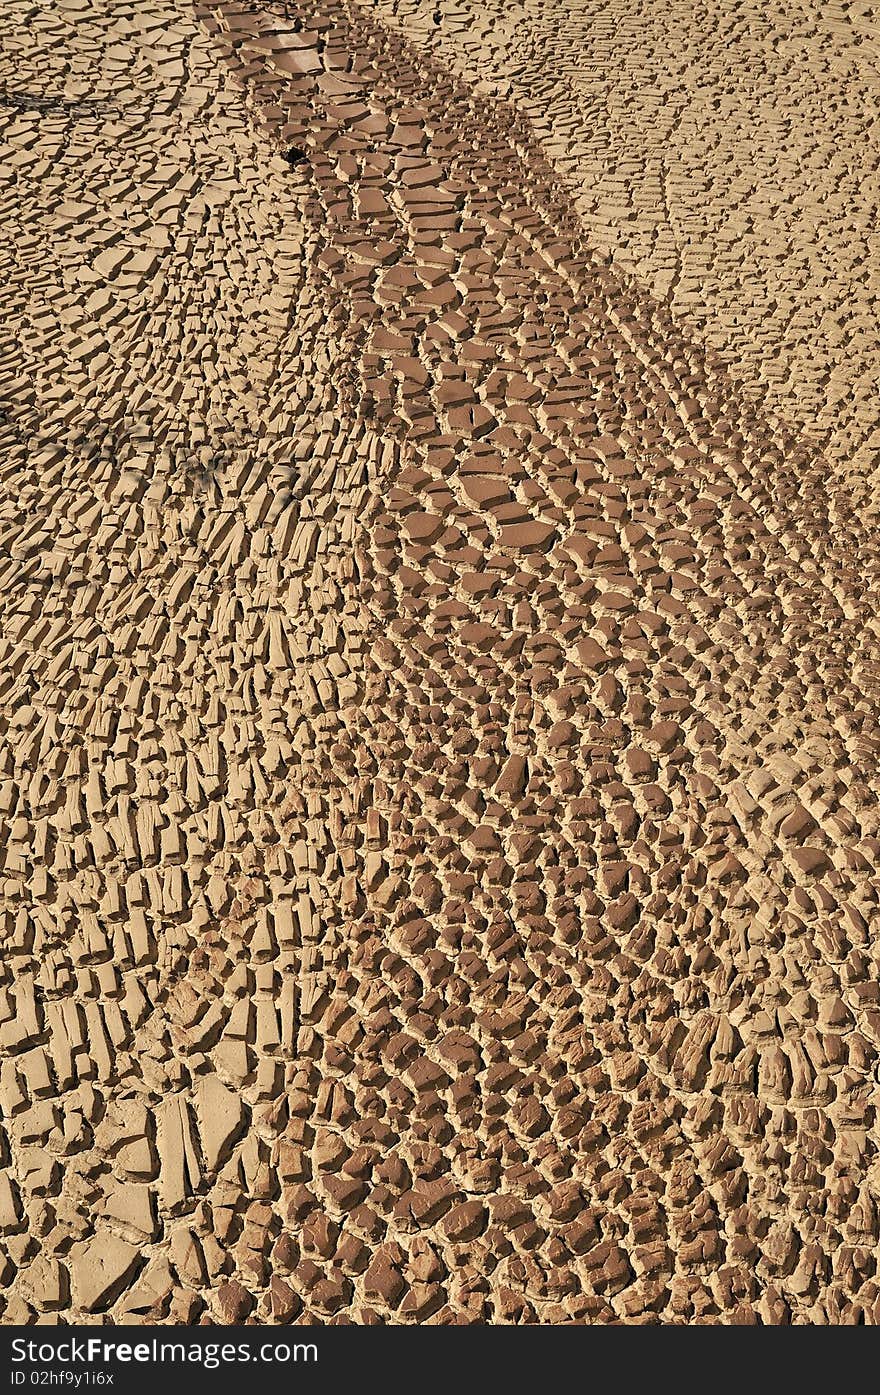 Shrinkage cracking in Arid Soil pattern of the nature